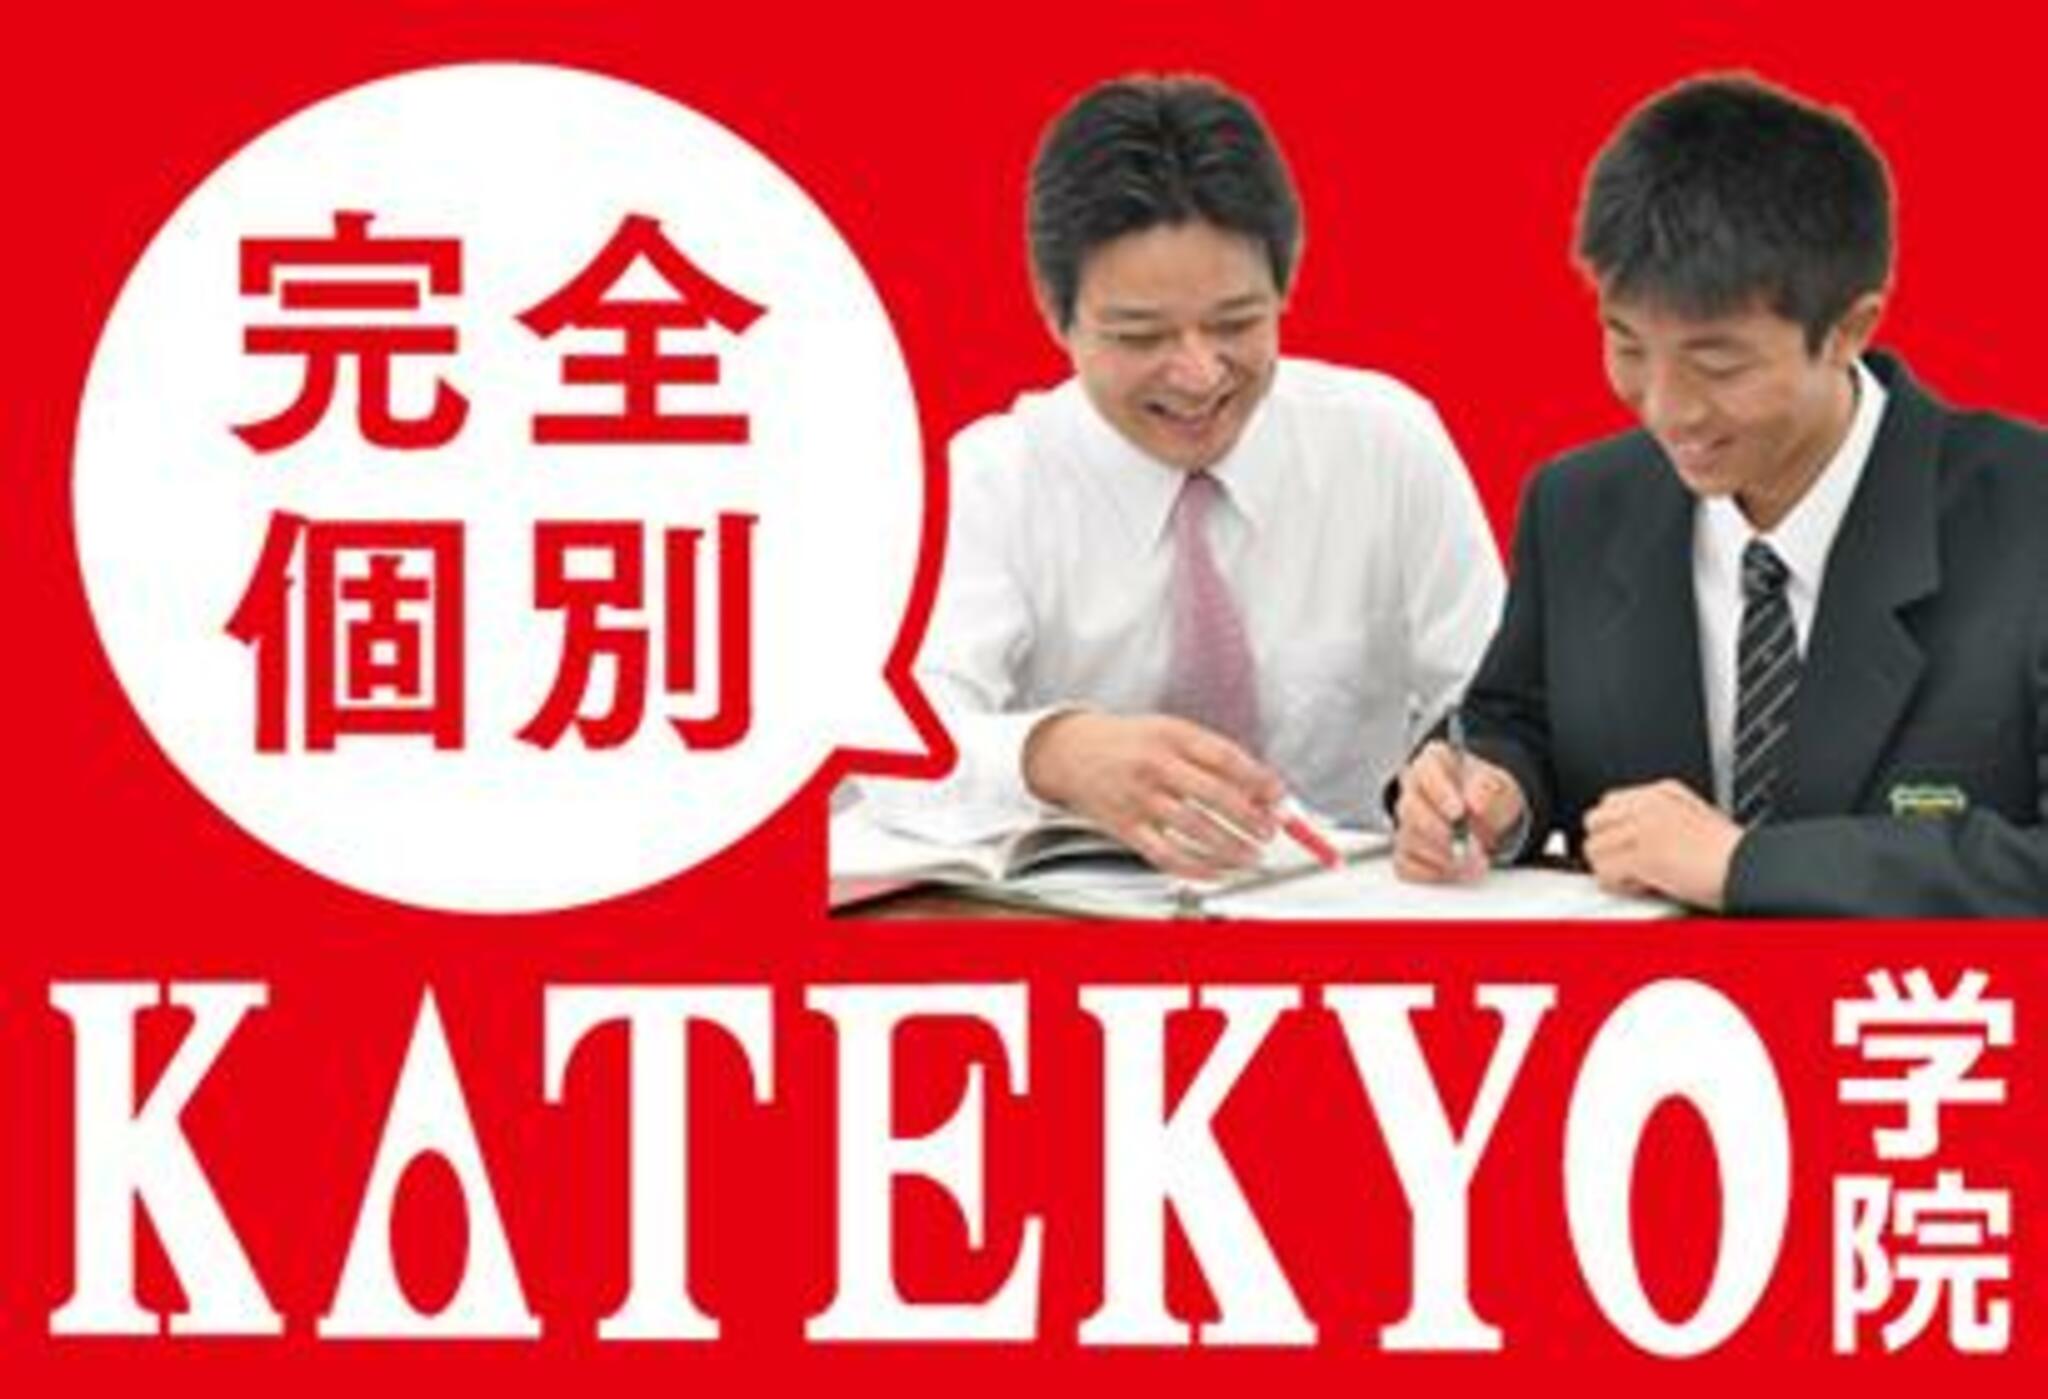 KATEKYO学院 福山校（個別指導塾）・広島県家庭教師協会（家庭教師）の代表写真5